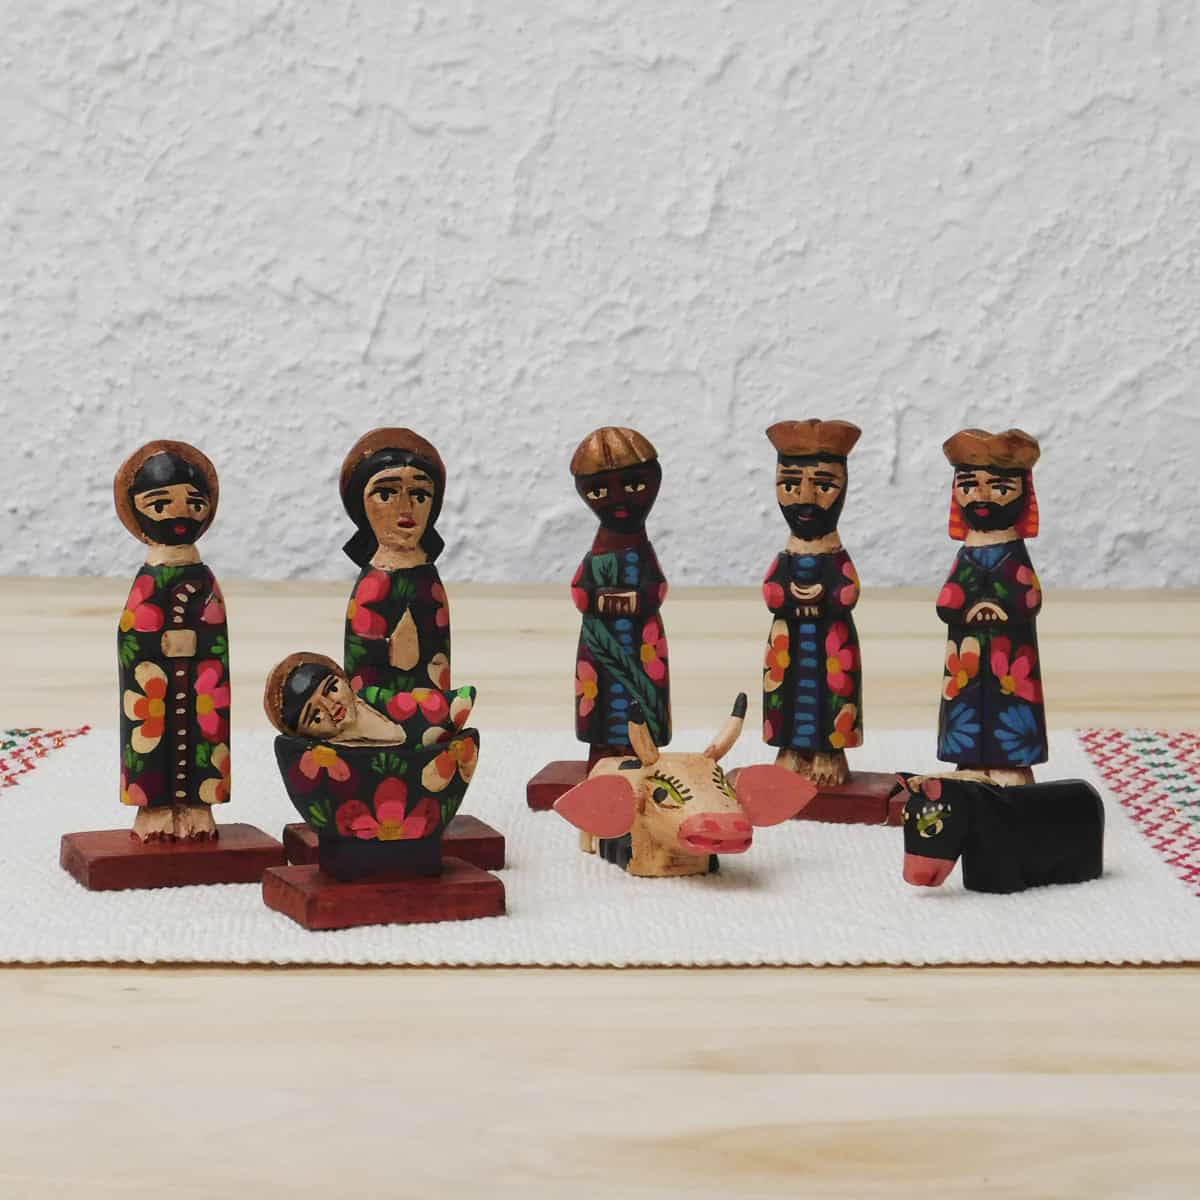 4" Wood Carved Nativity Set